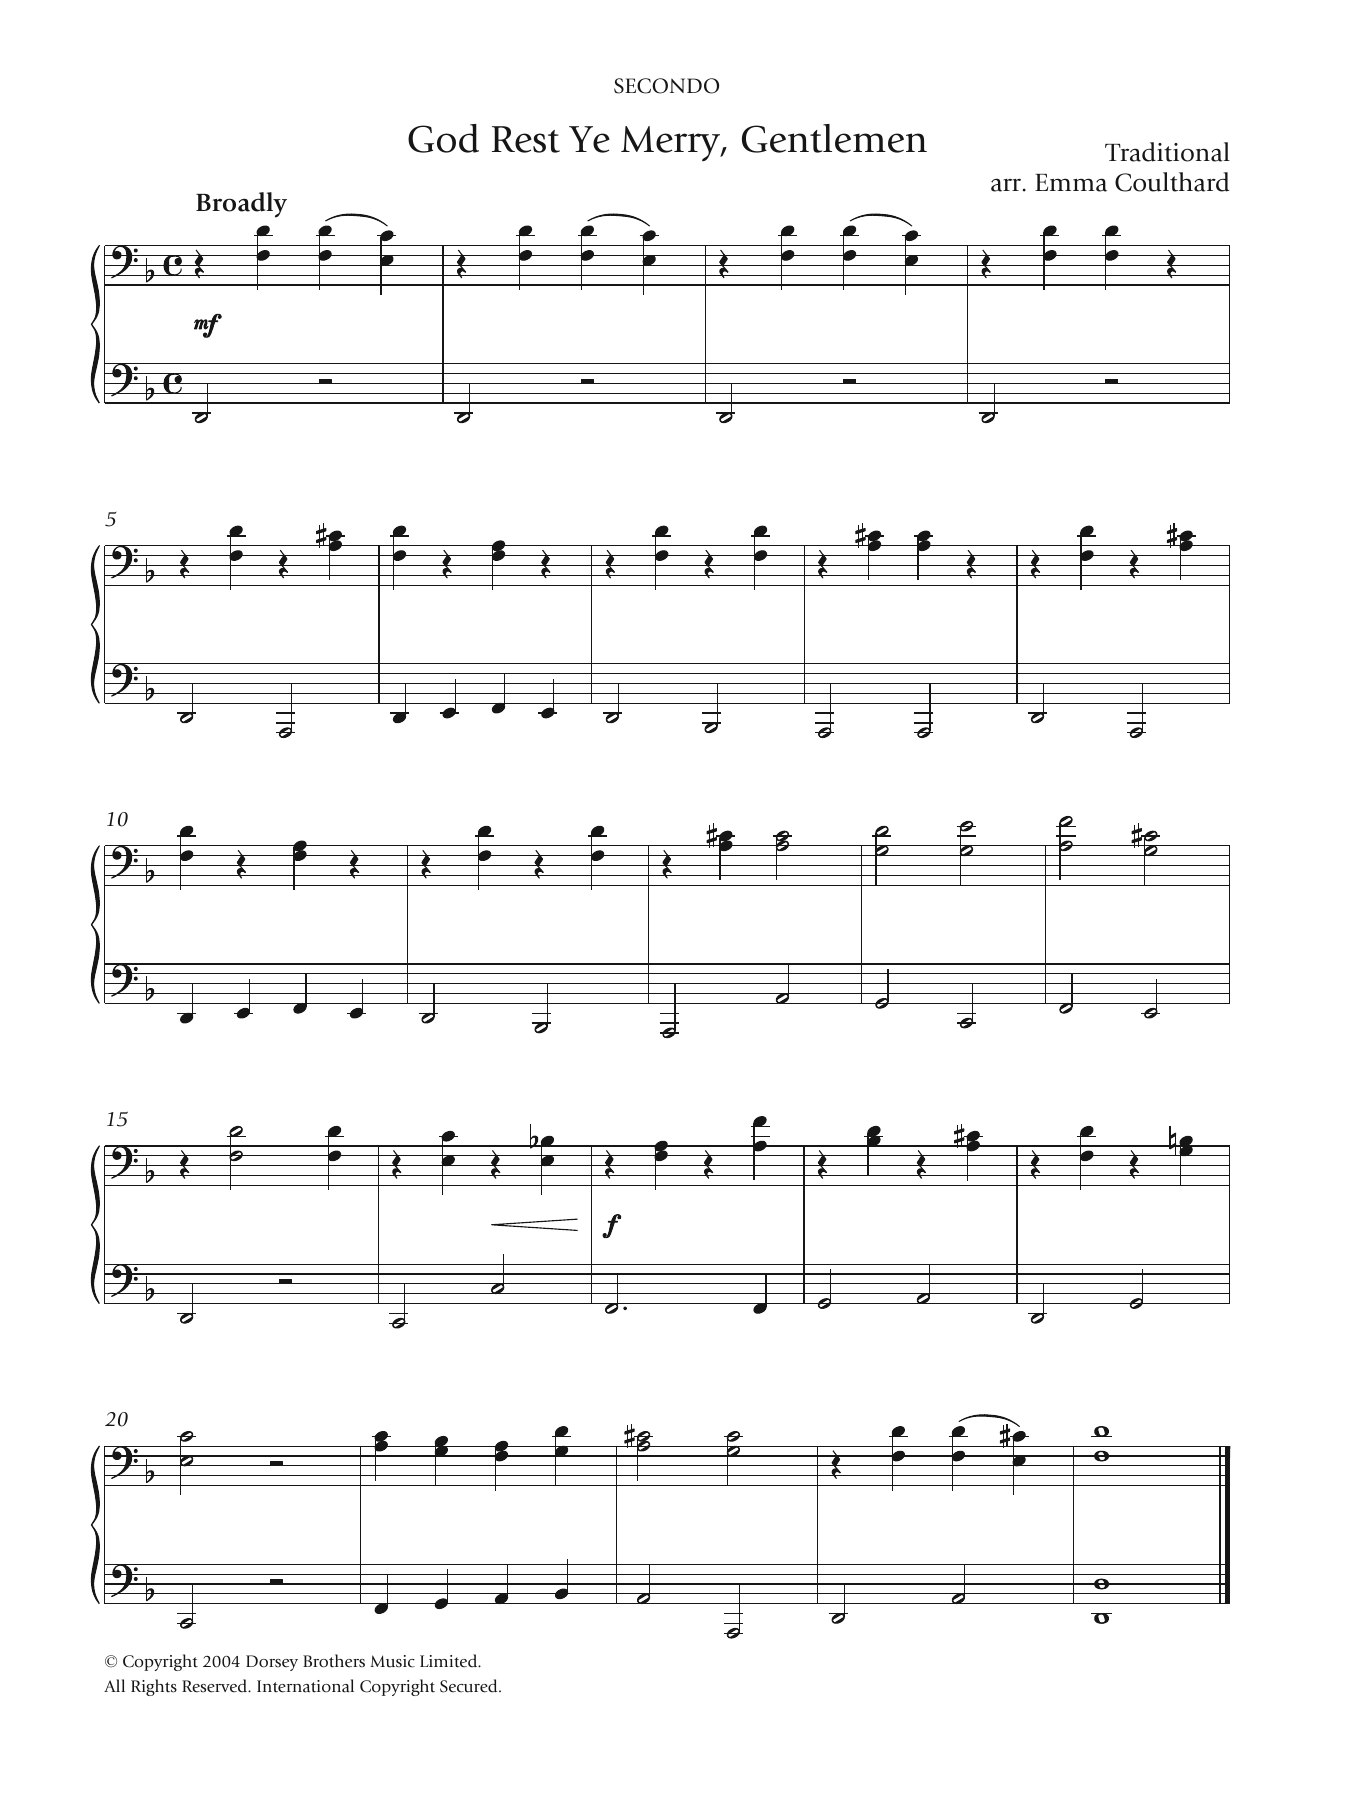 Christmas Carol God Rest Ye Merry, Gentlemen Sheet Music Notes & Chords for Guitar Ensemble - Download or Print PDF